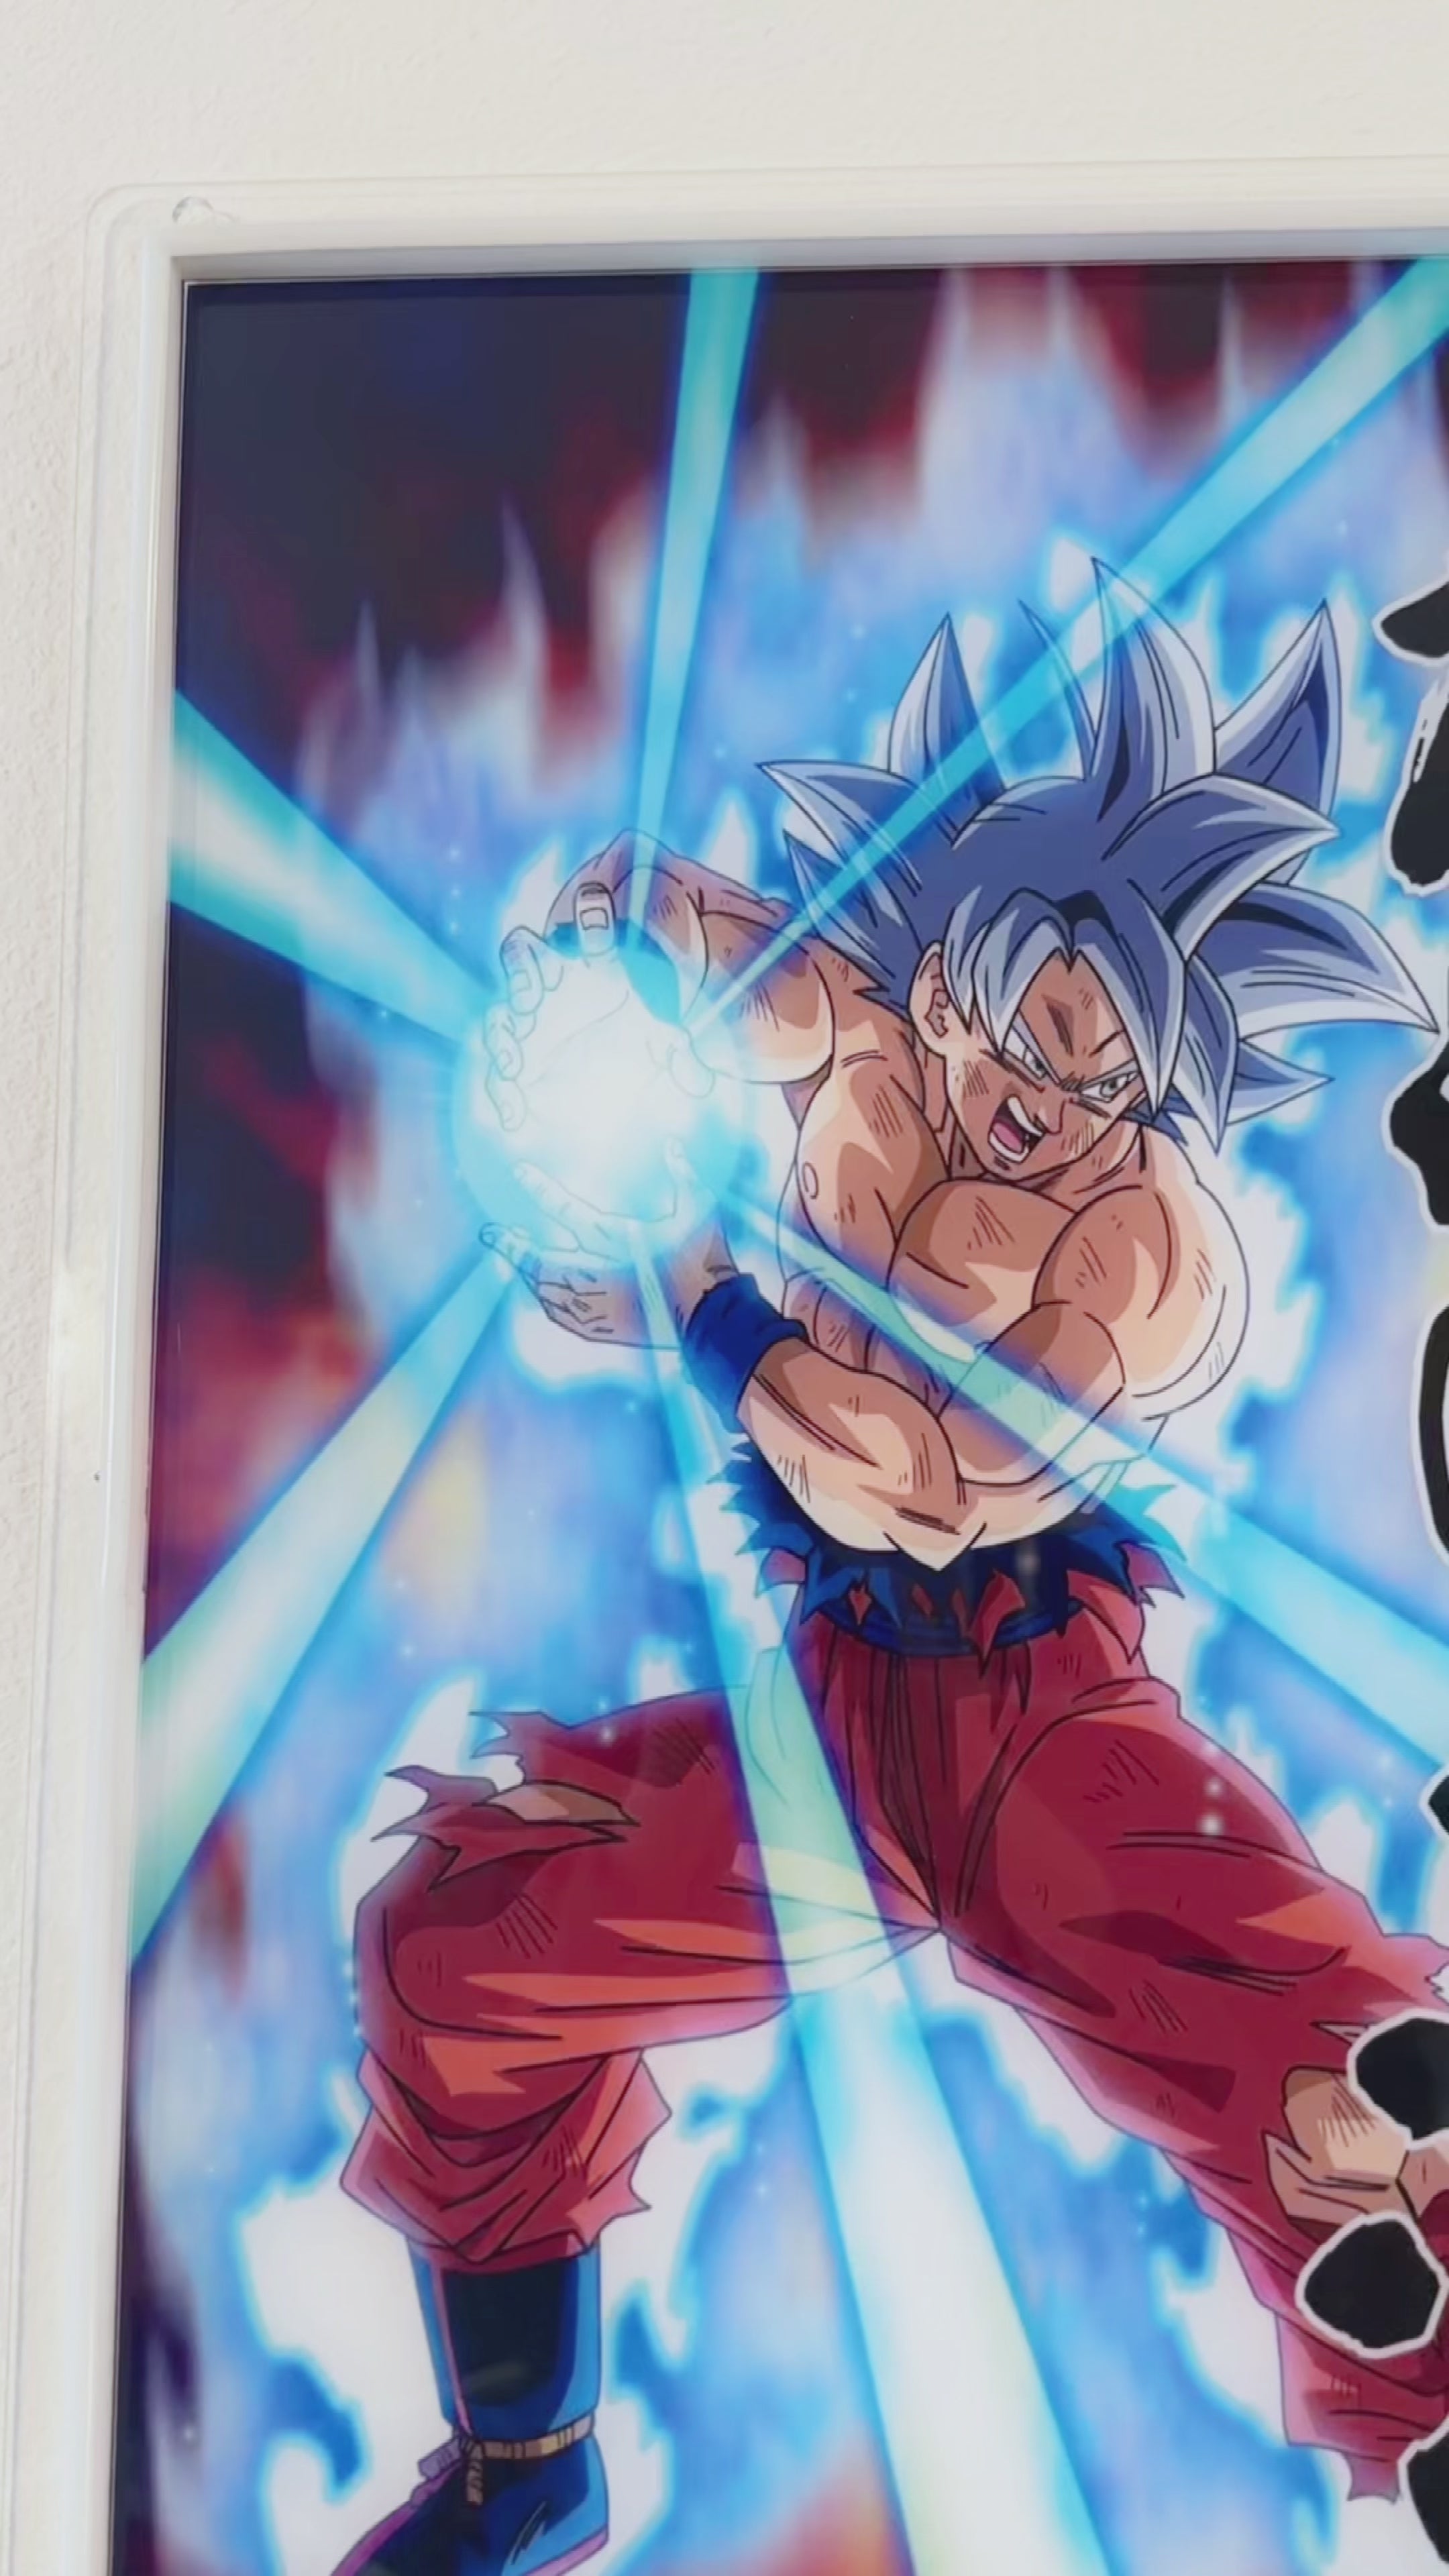 Goku Poster, Dragon Ball Goku Ultra Instinct Poster